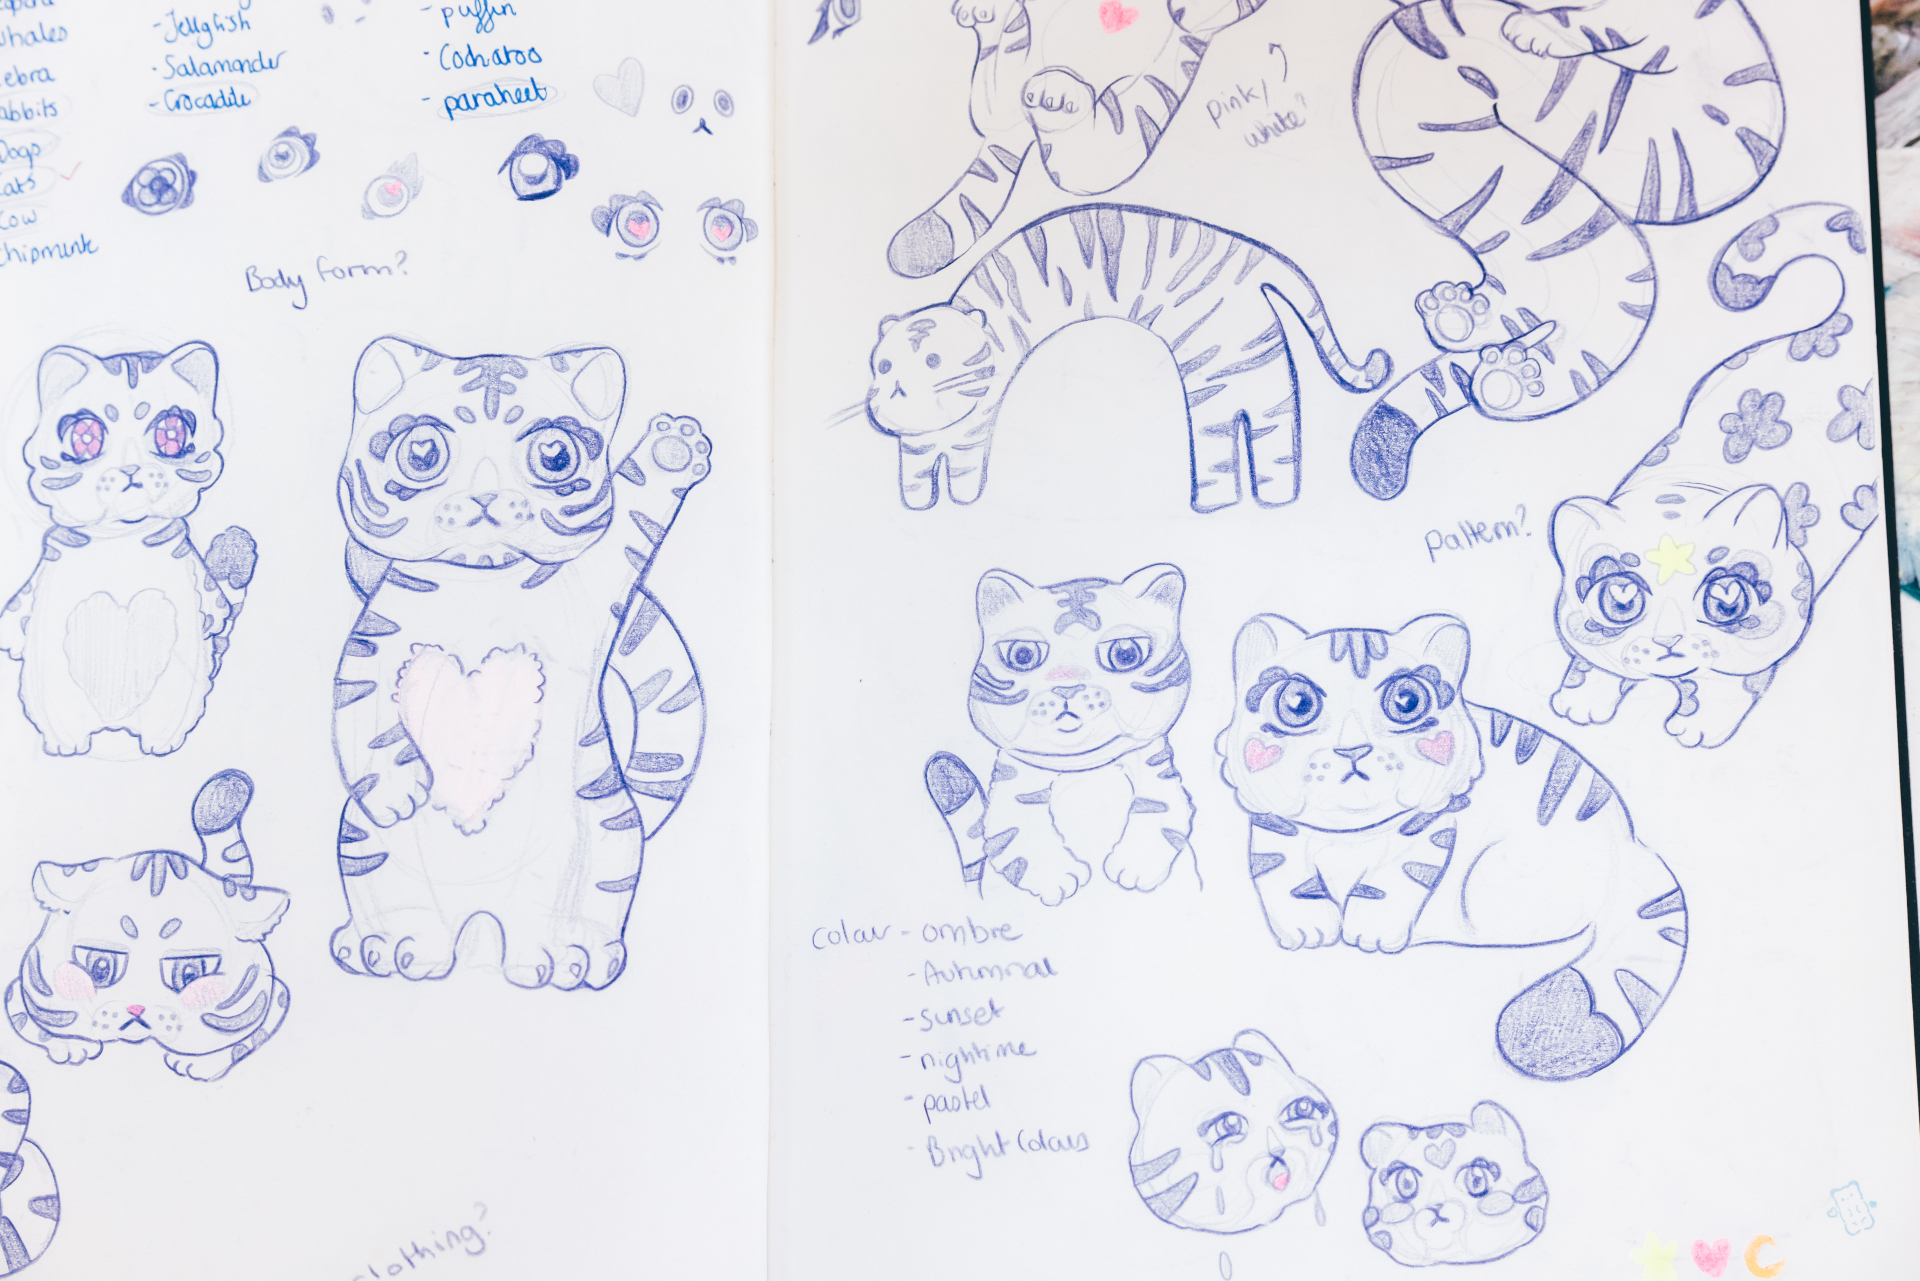 Sketches of cartoon cats